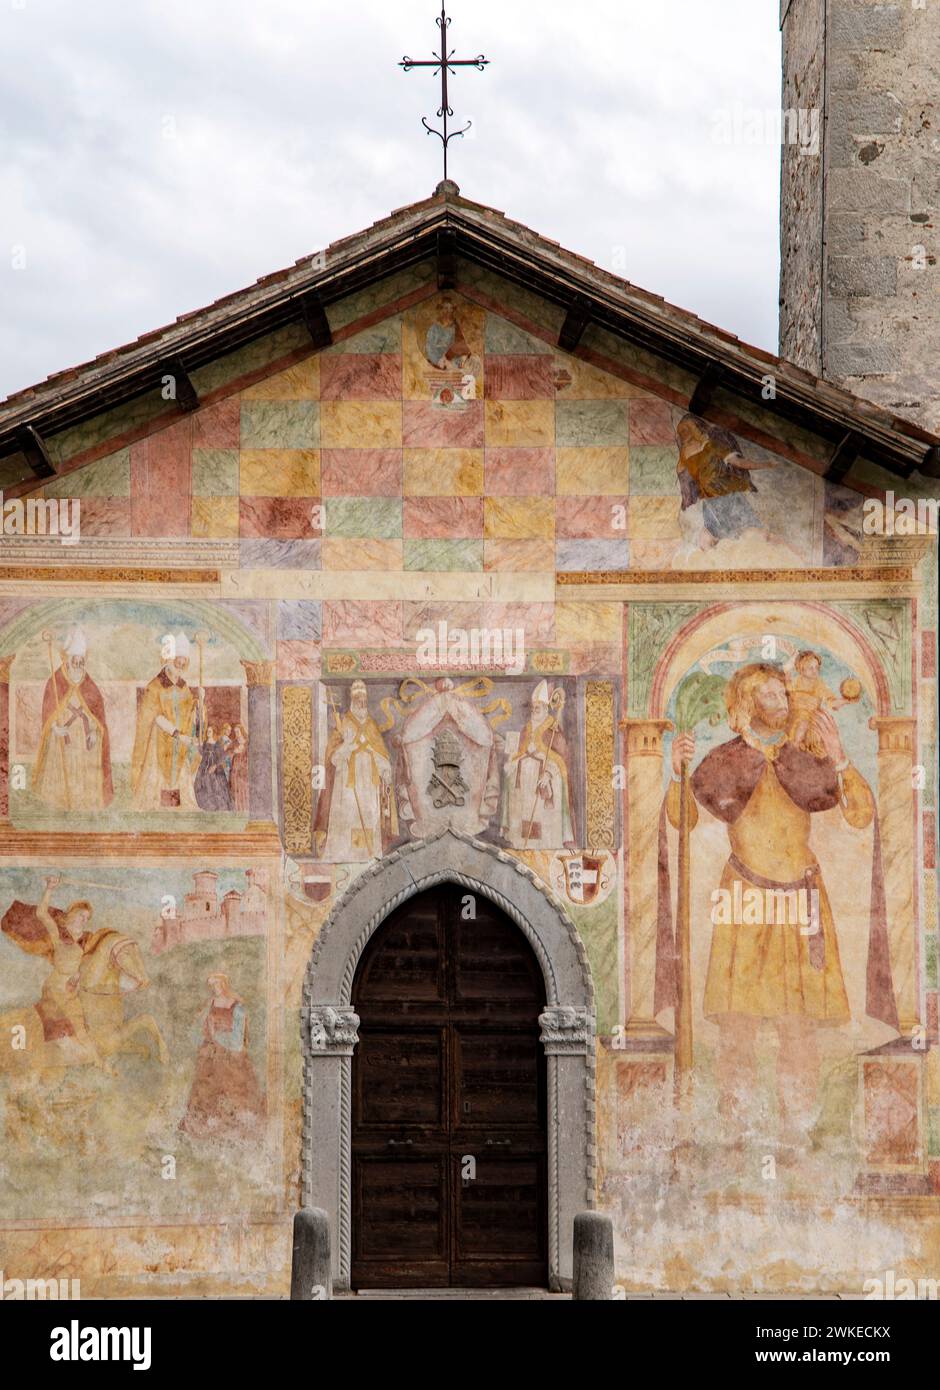 Affreschi sulla facciata di una chiesa a cividale Foto Stock